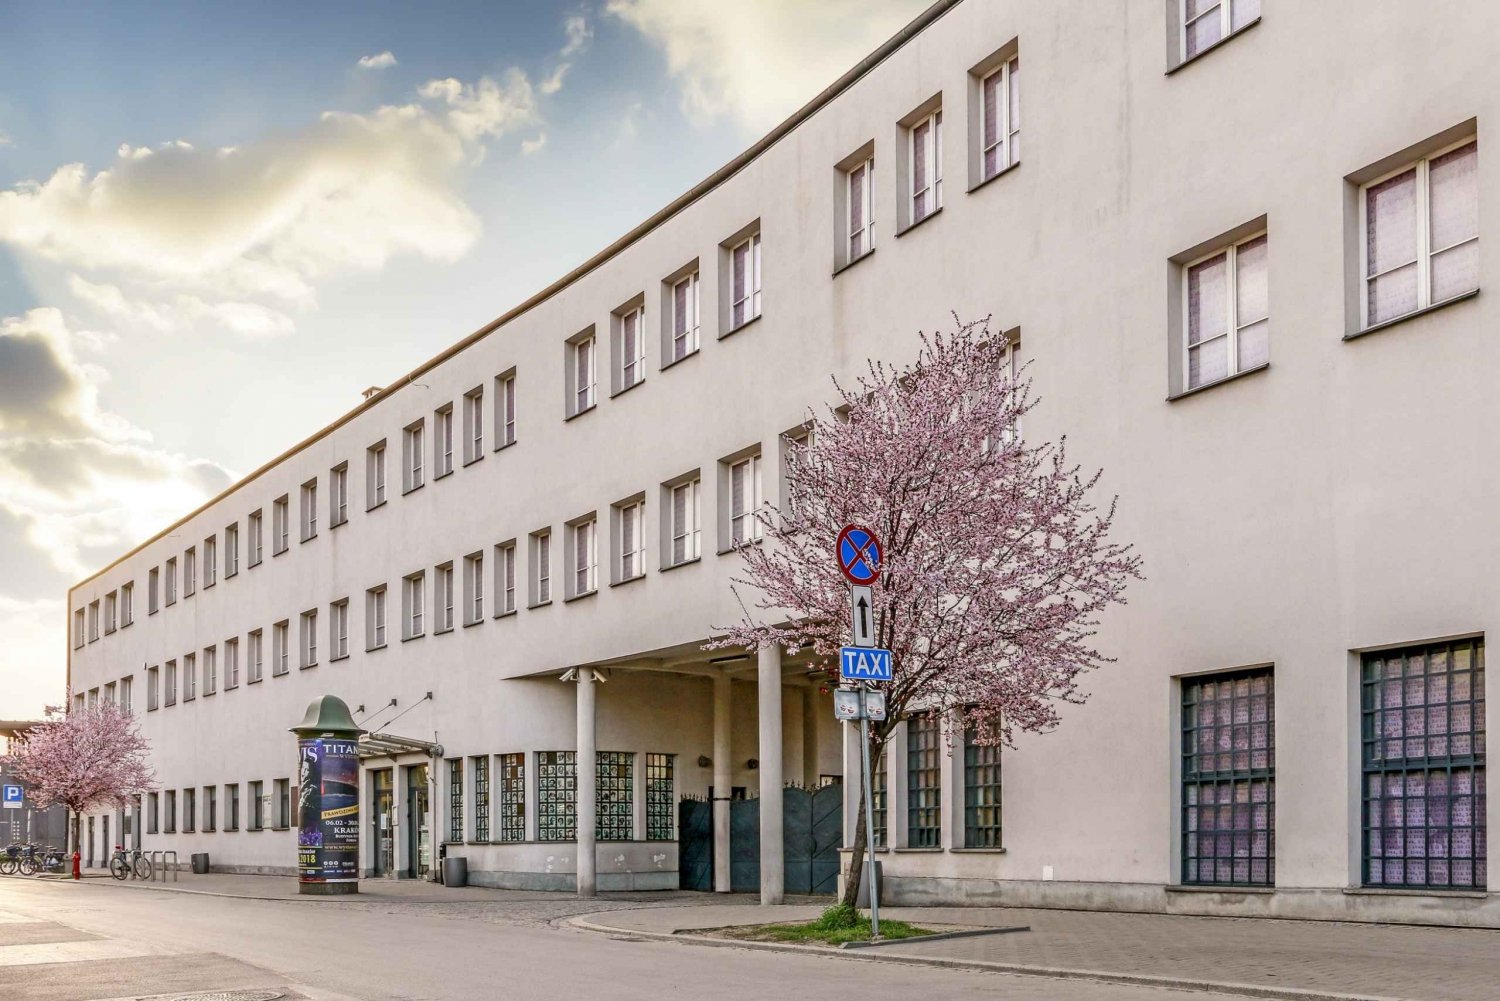 Cracovie : Visite et billet d'entrée à l'usine d'Oskar Schindler